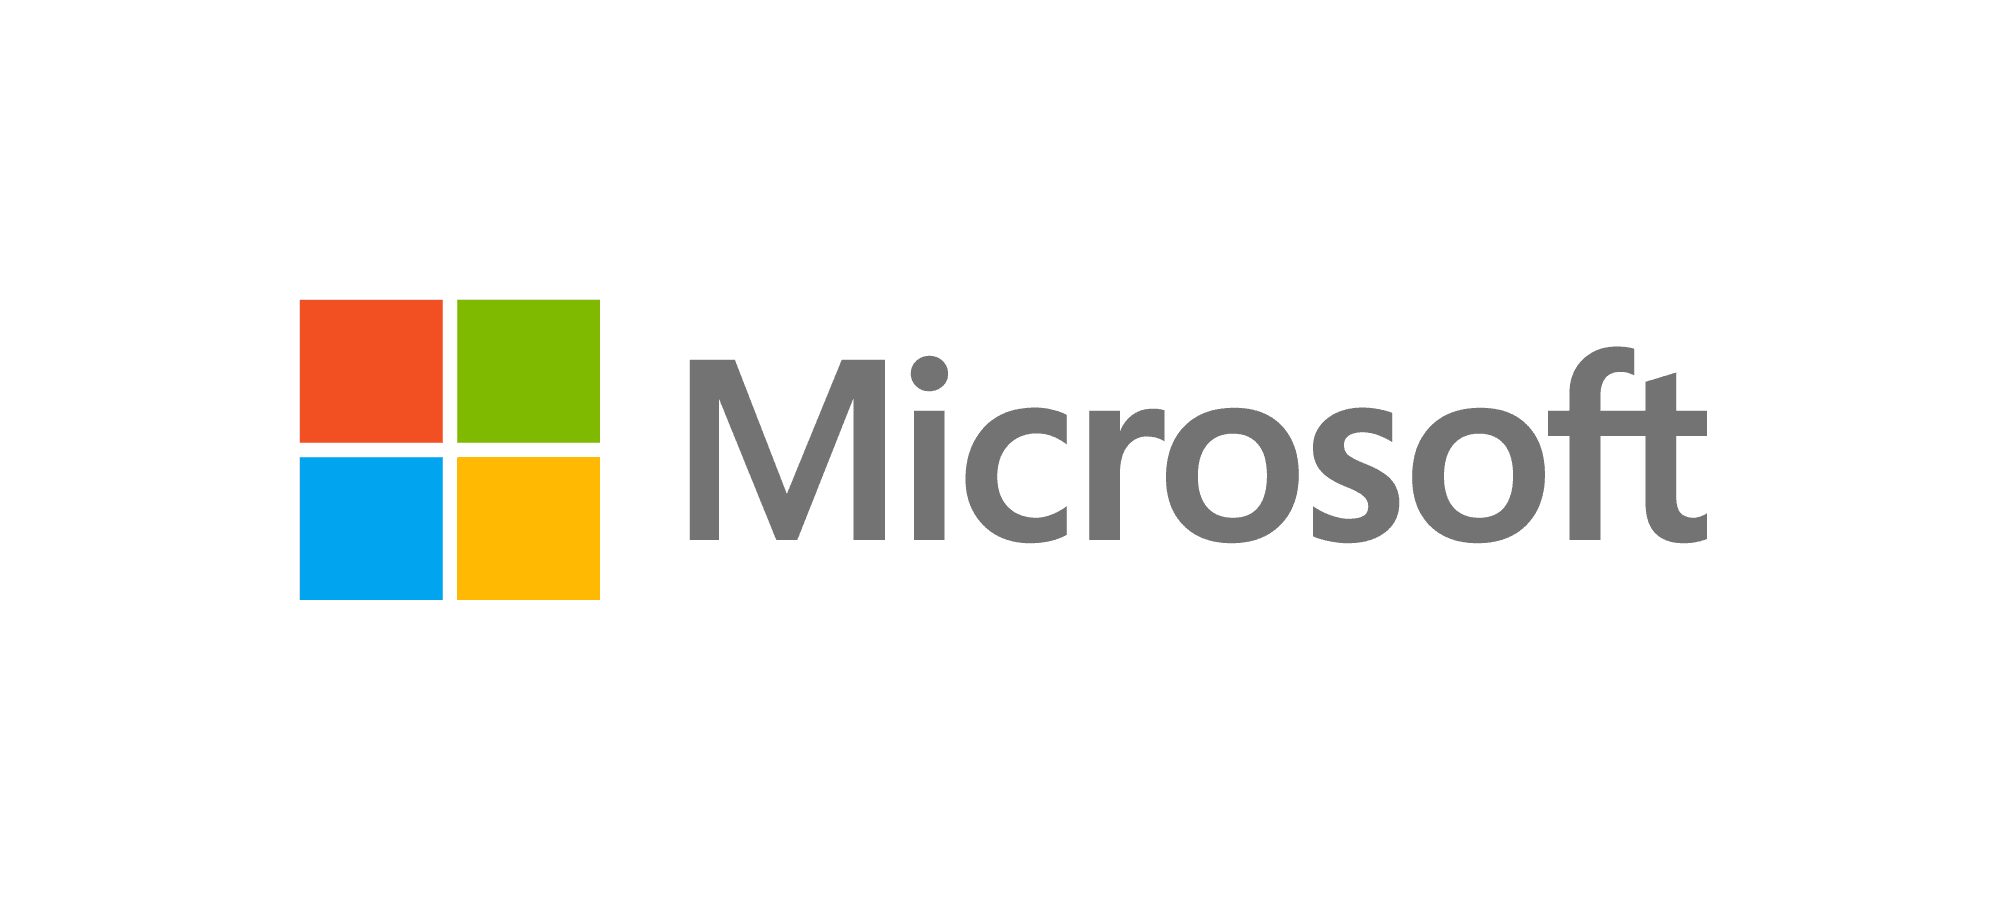 Update on Microsoft 365